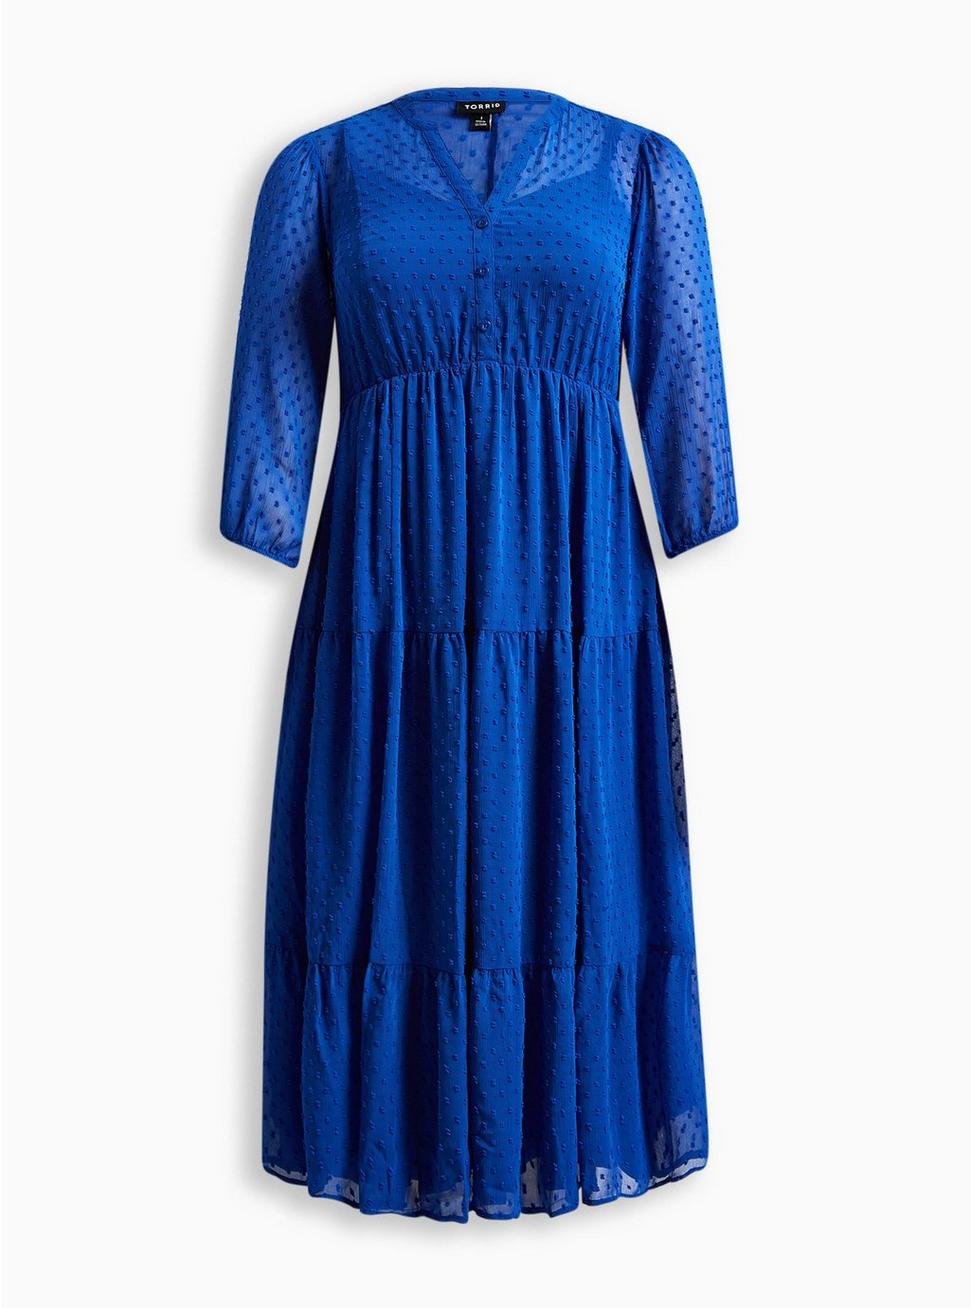 Plus Size Maxi Chiffon Clip Dot Pleated Dress, BLUE, hi-res